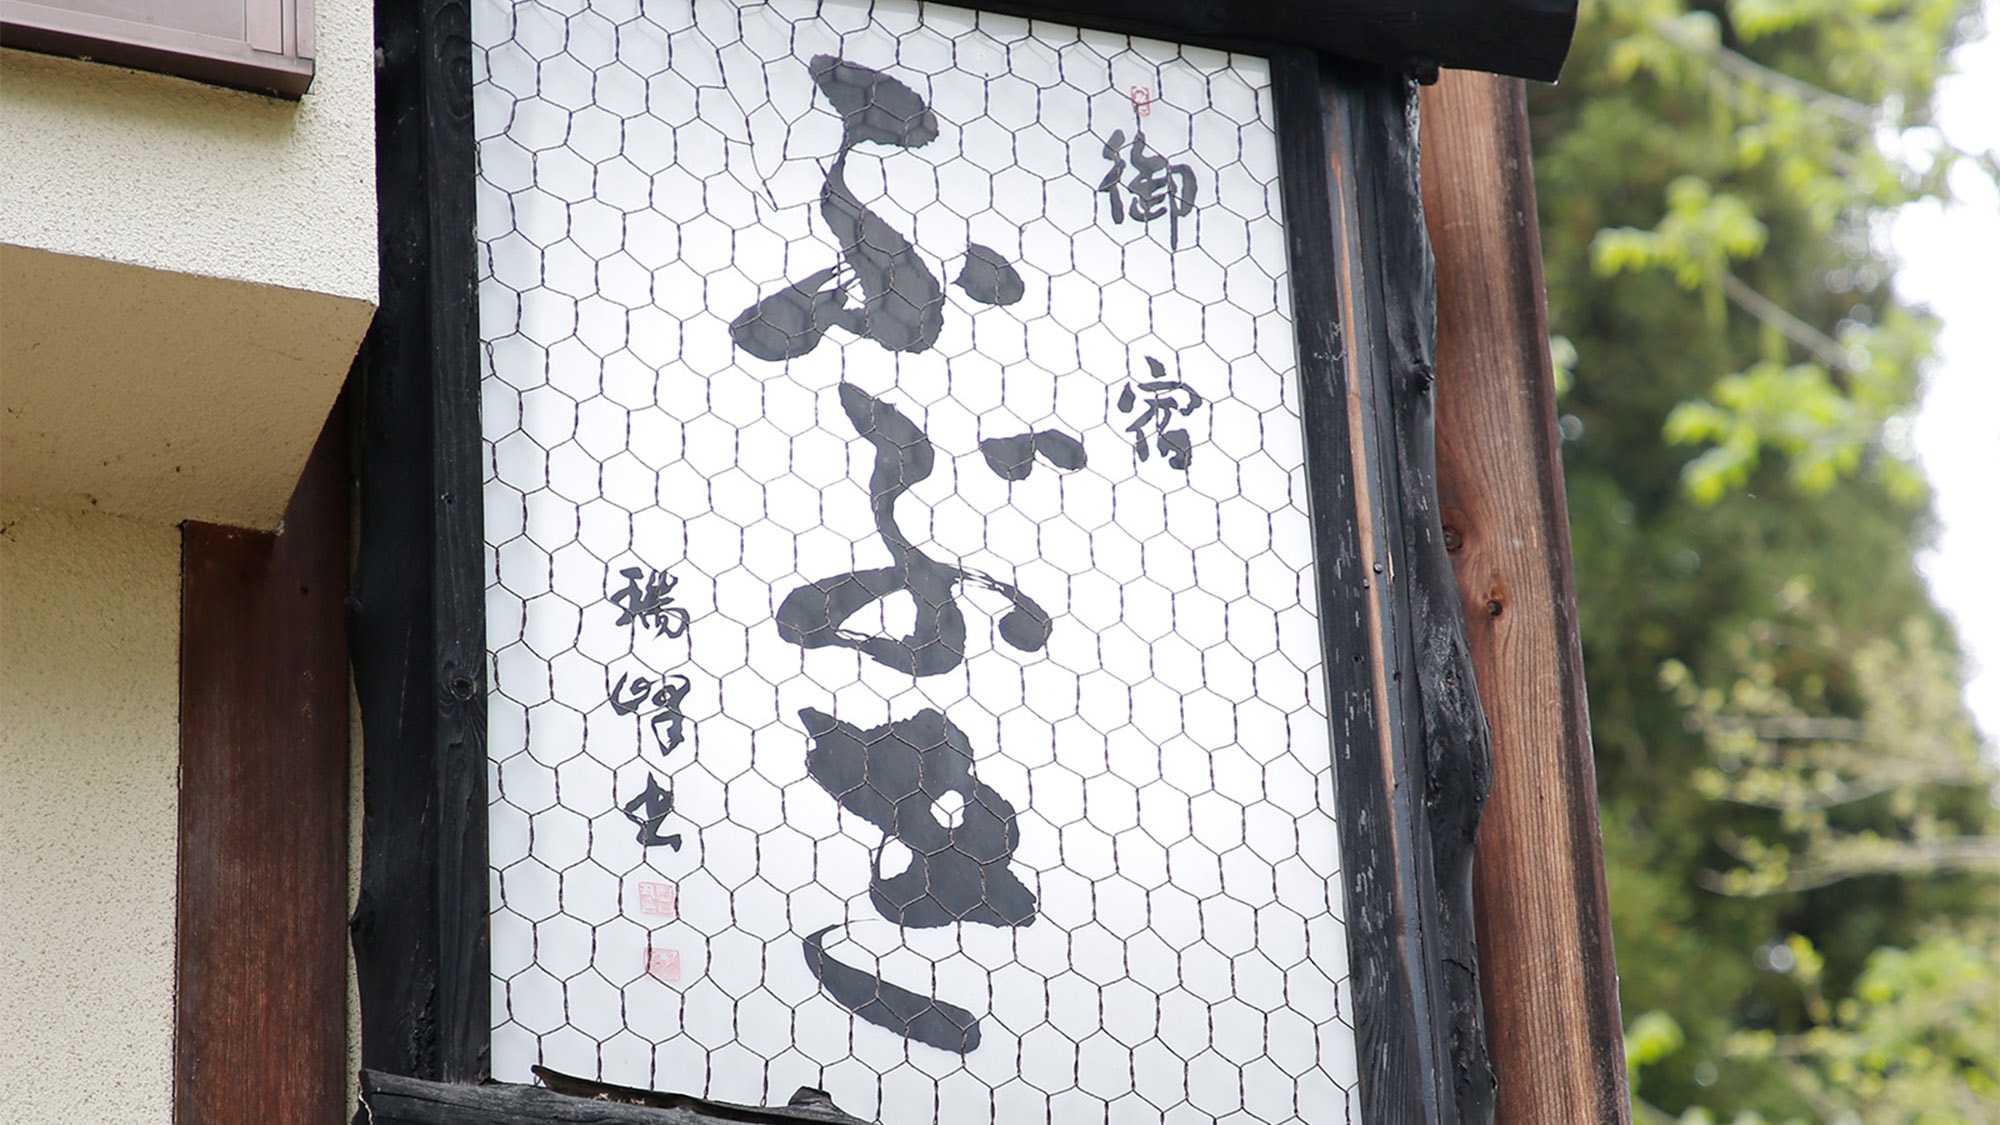 ・ Fubuki, an inn that boasts river fish dishes